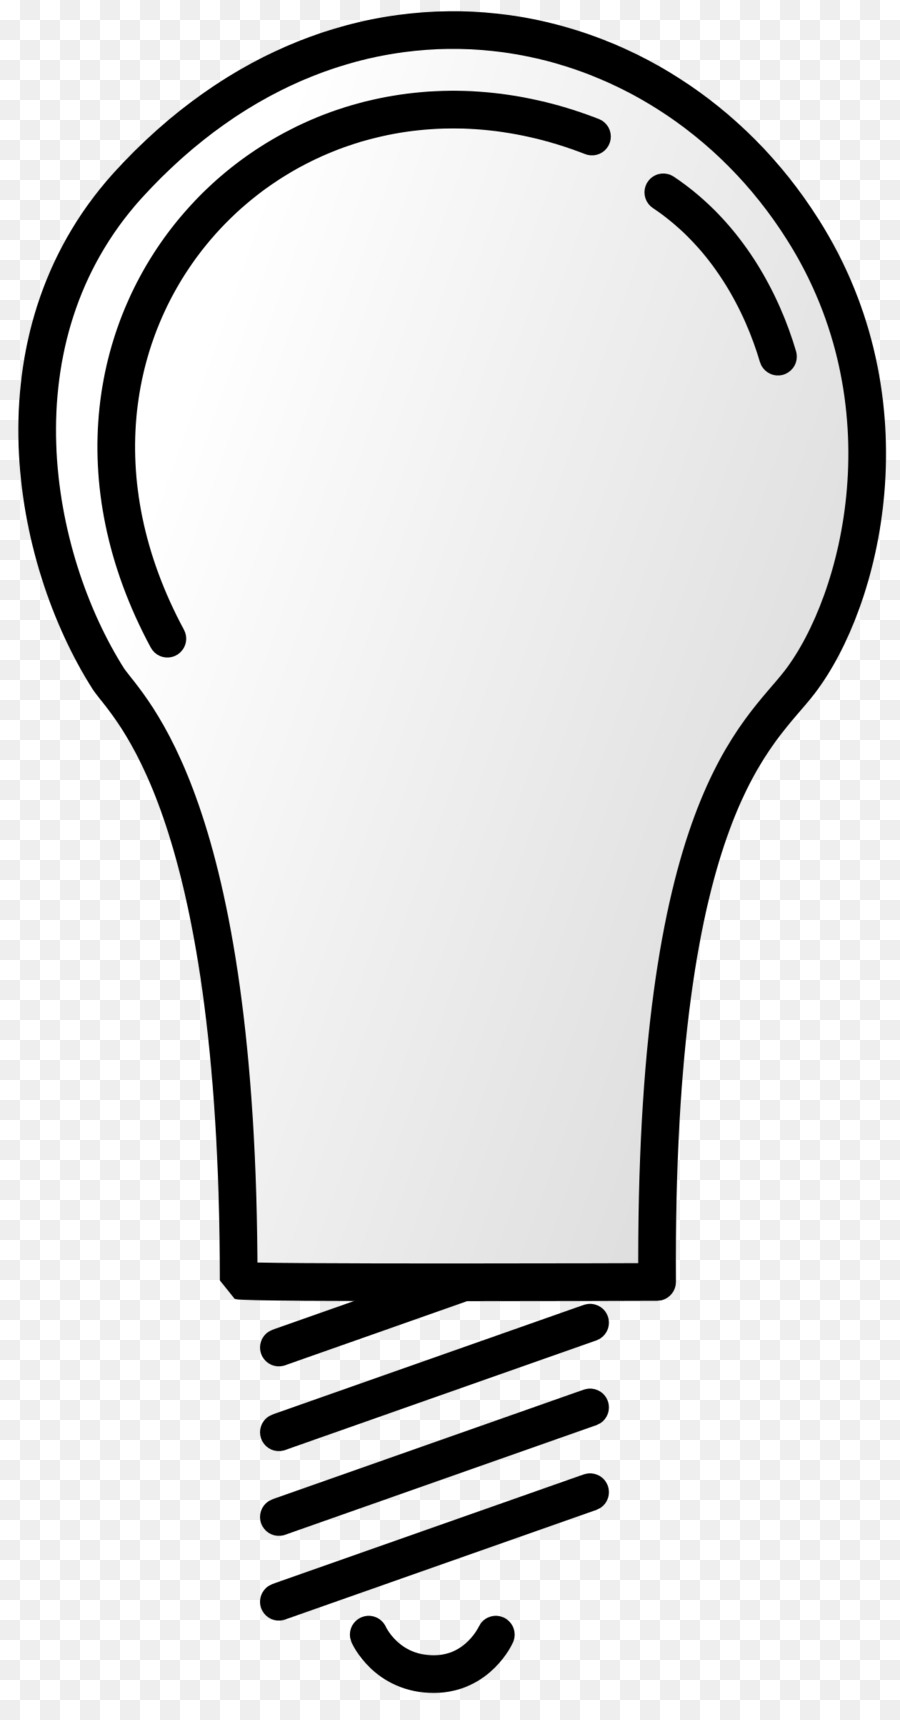 Free Lightbulb Transparent, Download Free Clip Art, Free Clip Art on